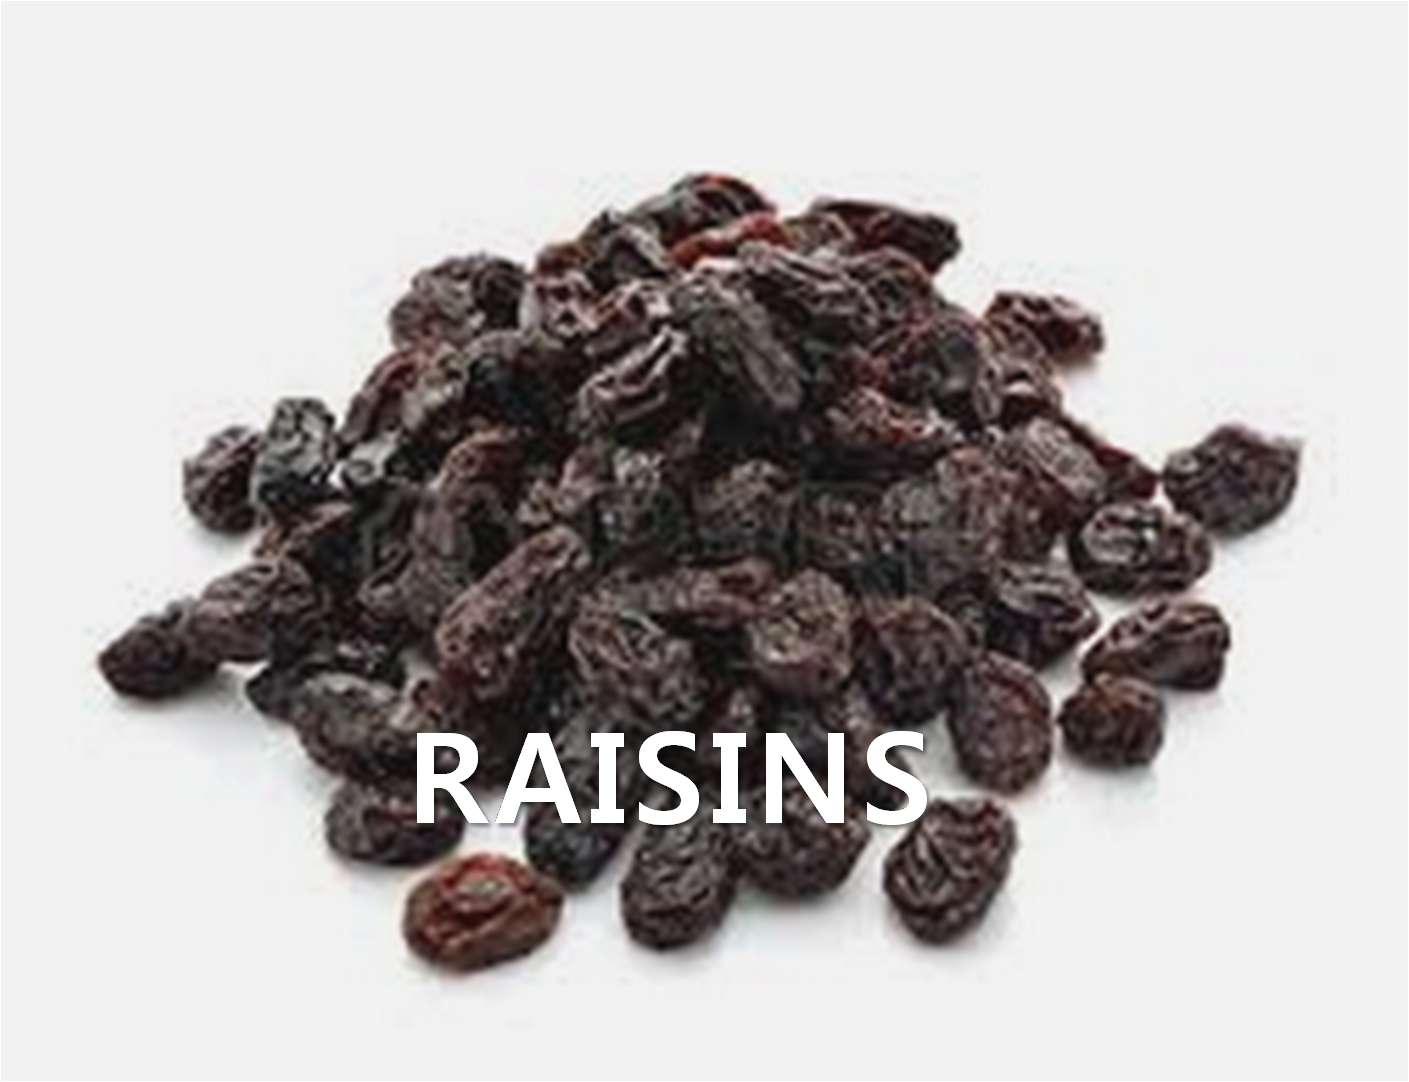 OTHERS,RaisinsDried,import by Hainong. co.,Ltd. http://www.hainong.com